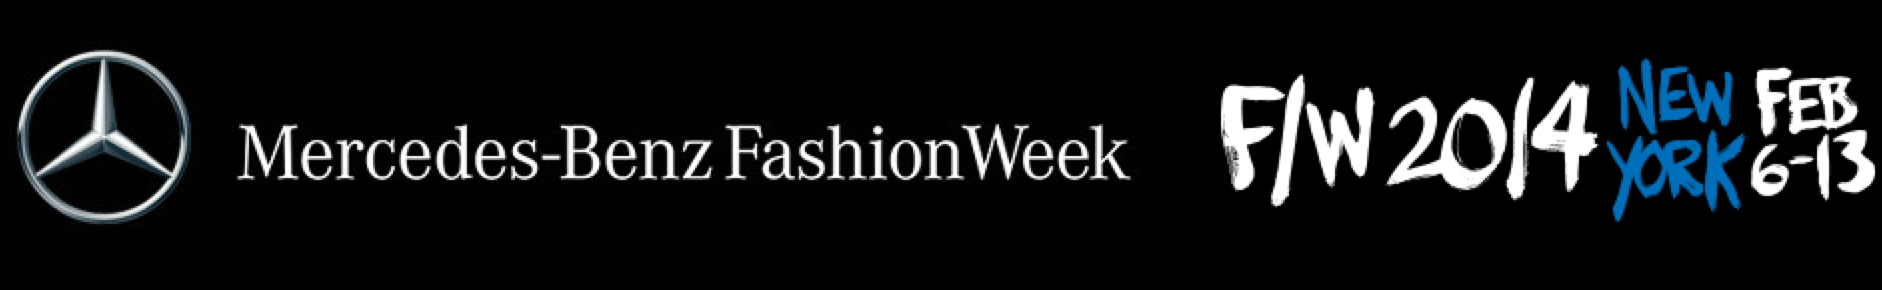 what to wear fashion week 